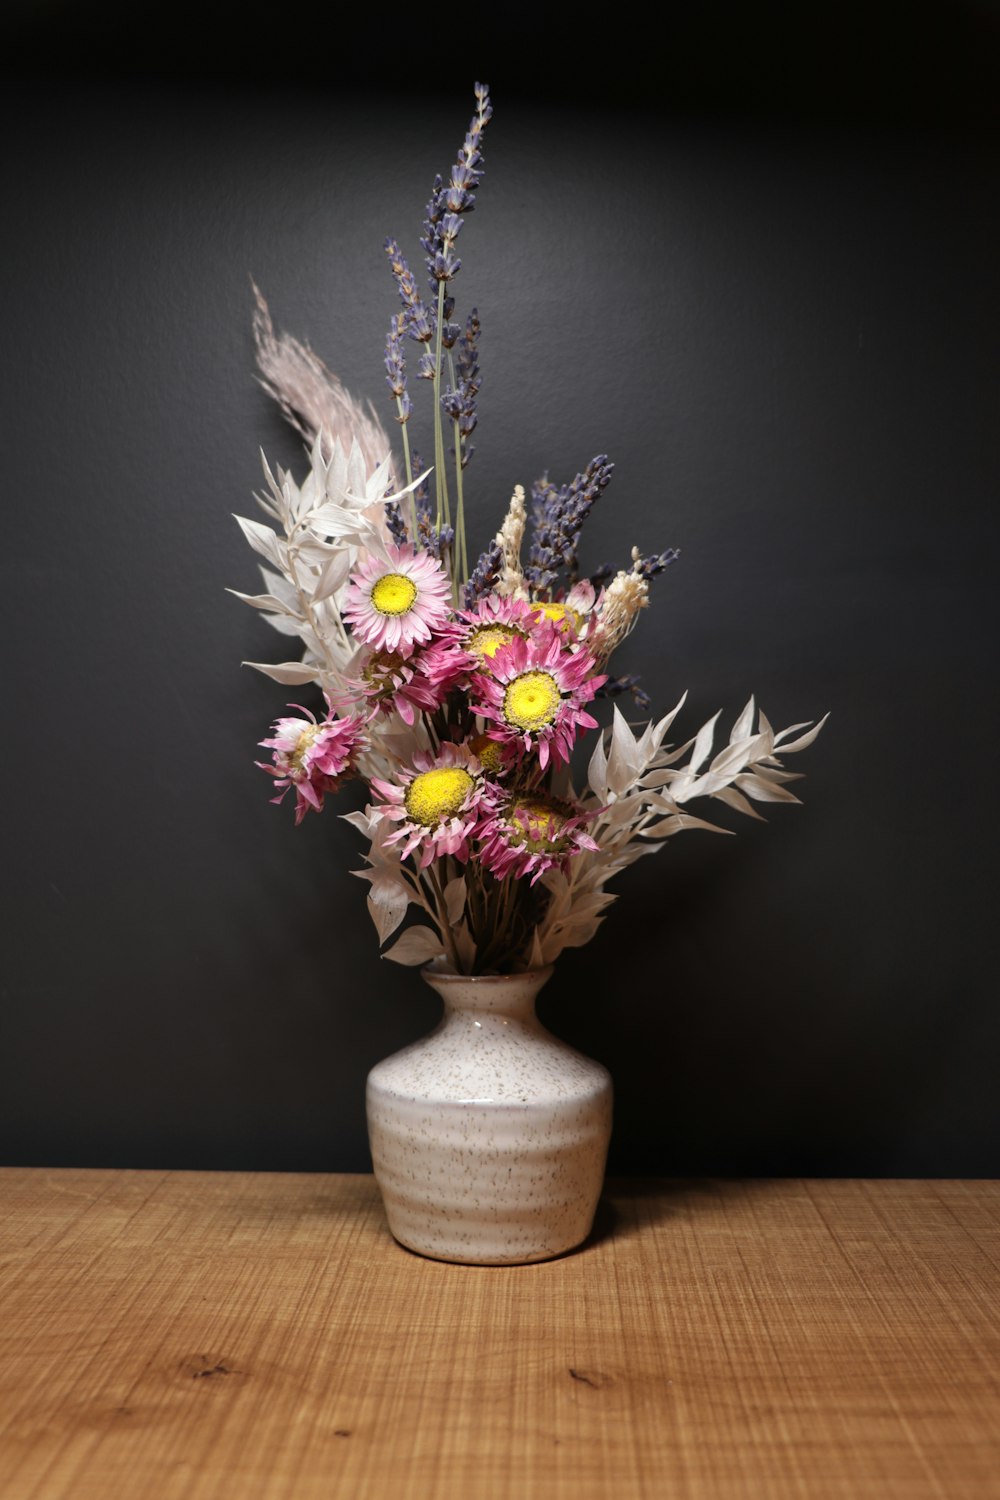 white and purple flower in white ceramic vase